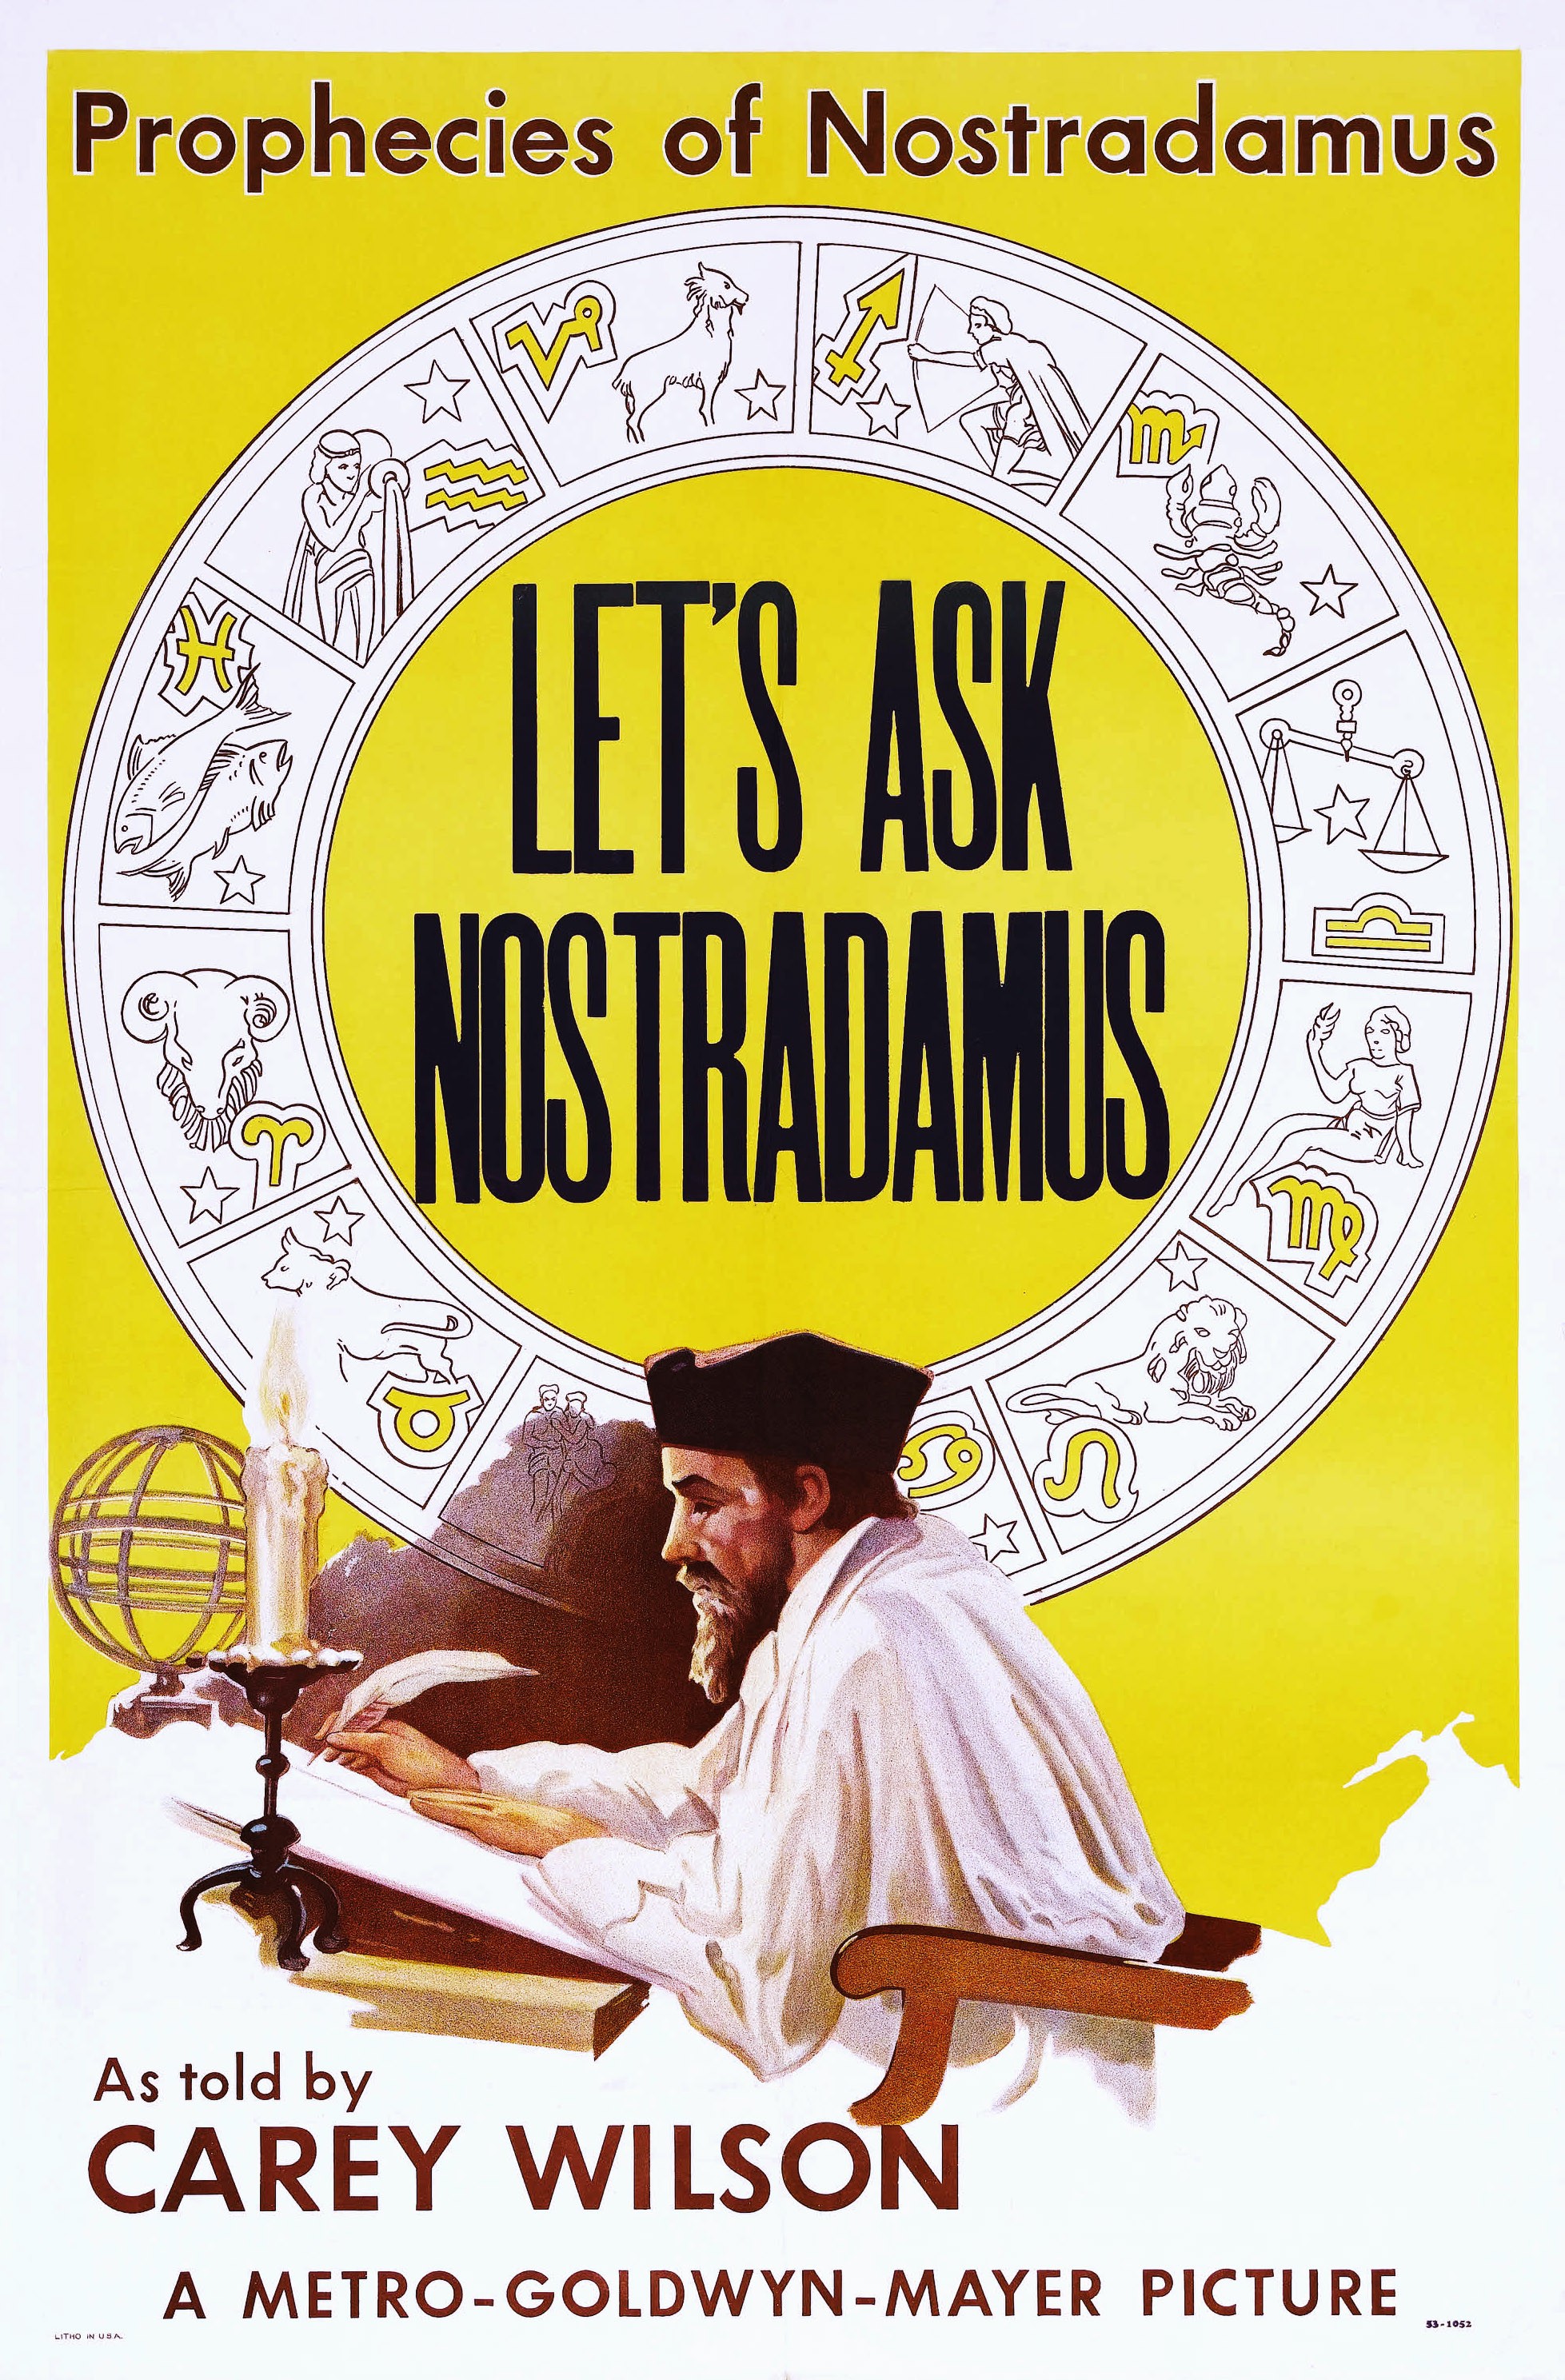 Let’s Ask Nostradamus